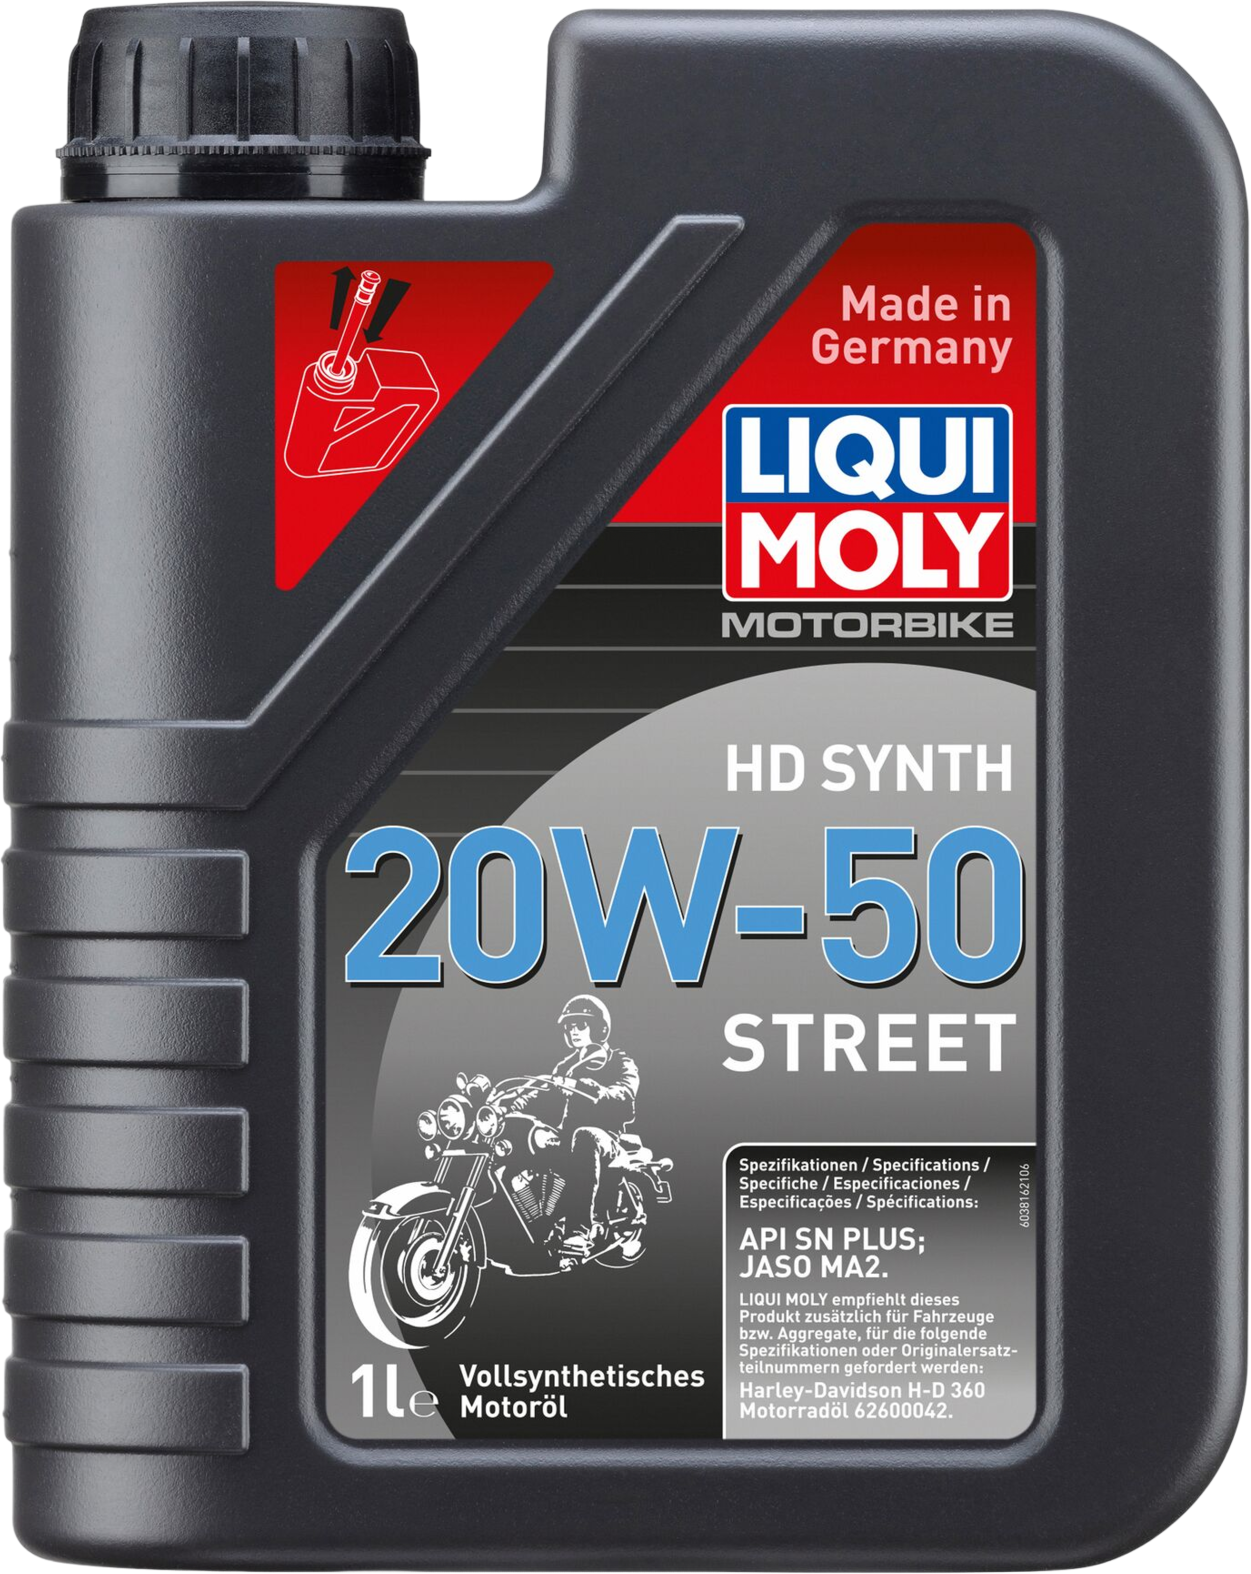 Liqui Moly Motorbike HD Synth 20W-50 Street, 1 lt